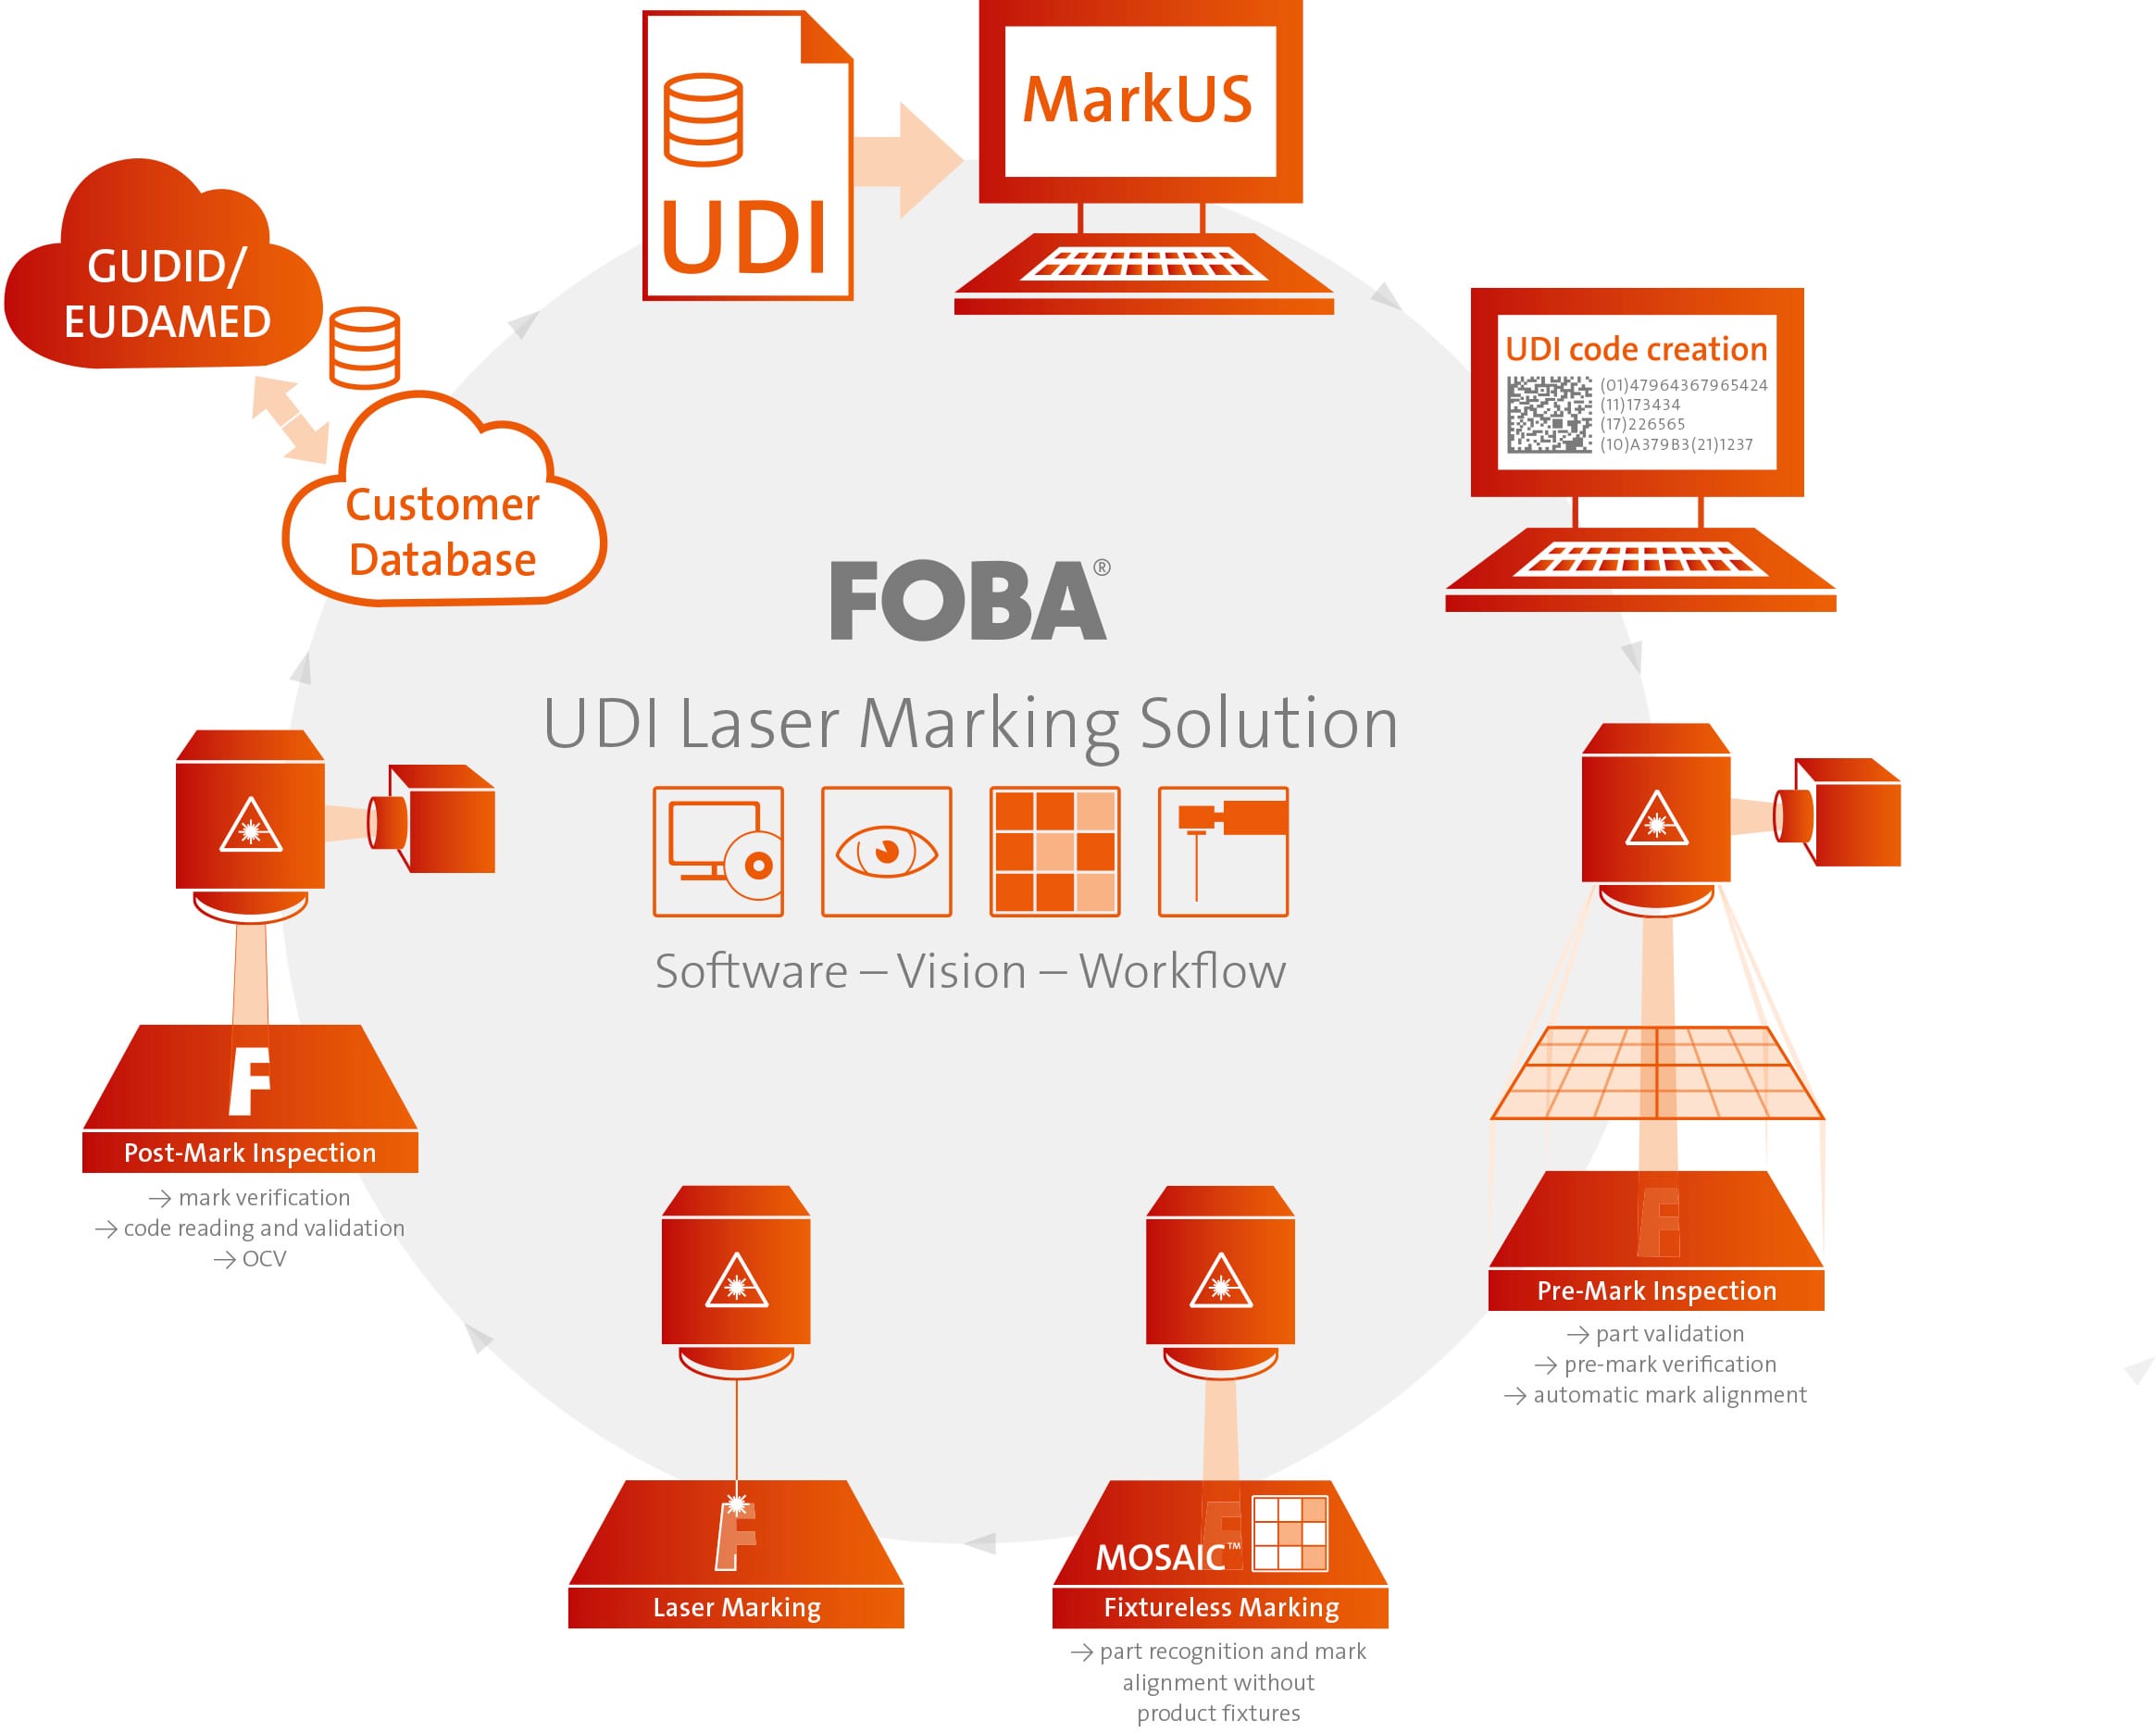 FOBA's closed-loop marking process